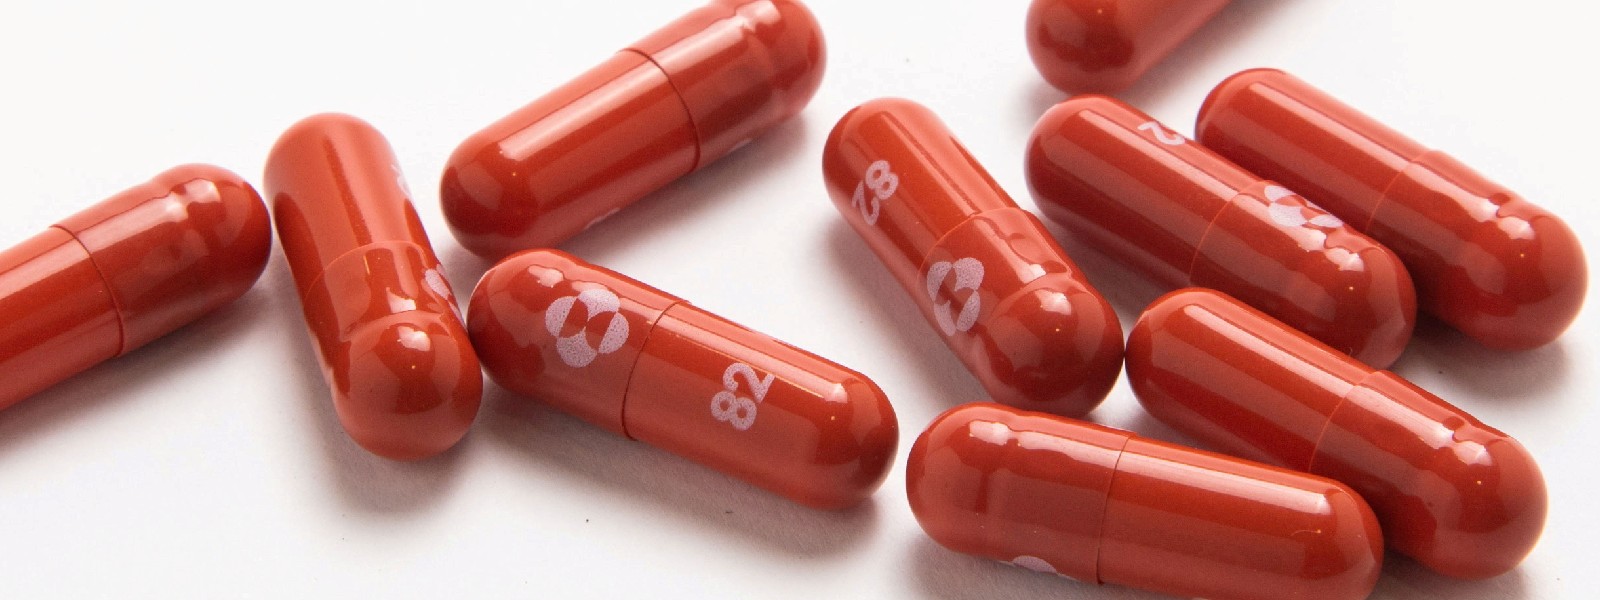 Sri Lanka delays imports of Molnupiravir pill